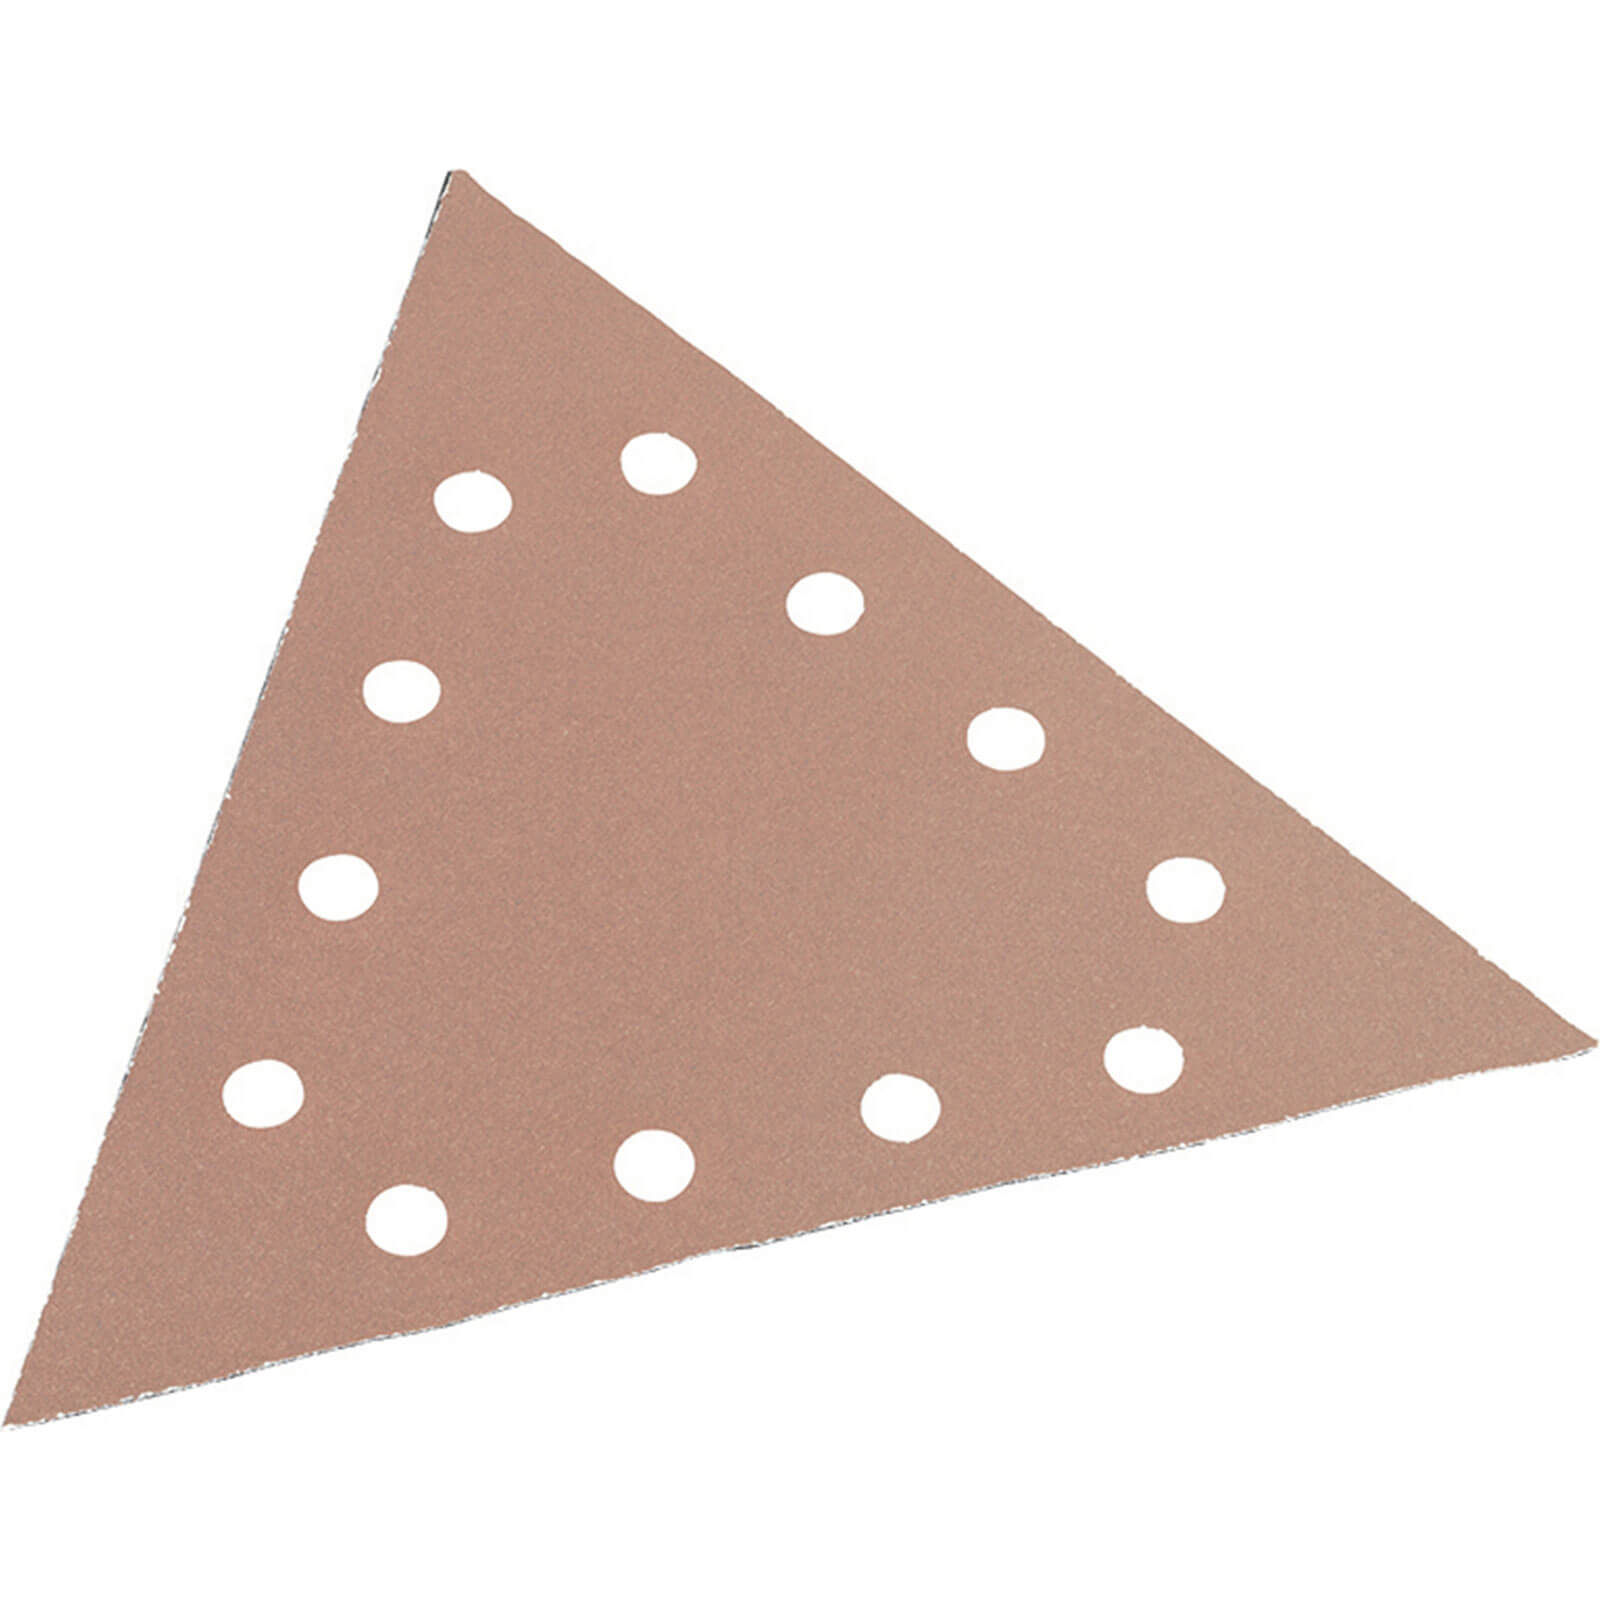 Image of Flex Triangular Sanding Sheets for WSE 7 and WST 700 Giraffe Sanders 120g Pack of 25